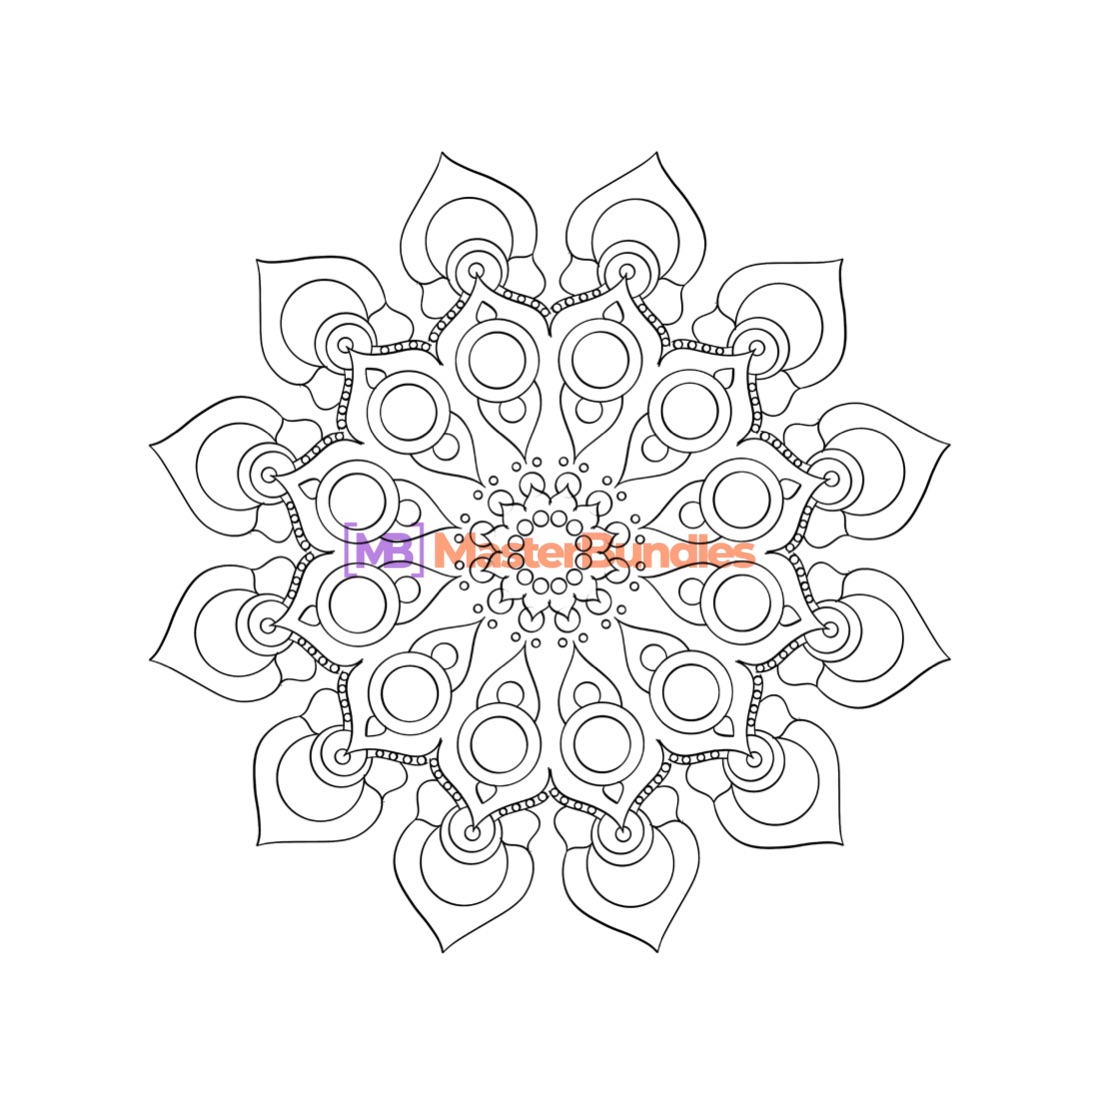 Colourful Mandala Design - Thin Strokes preview image.